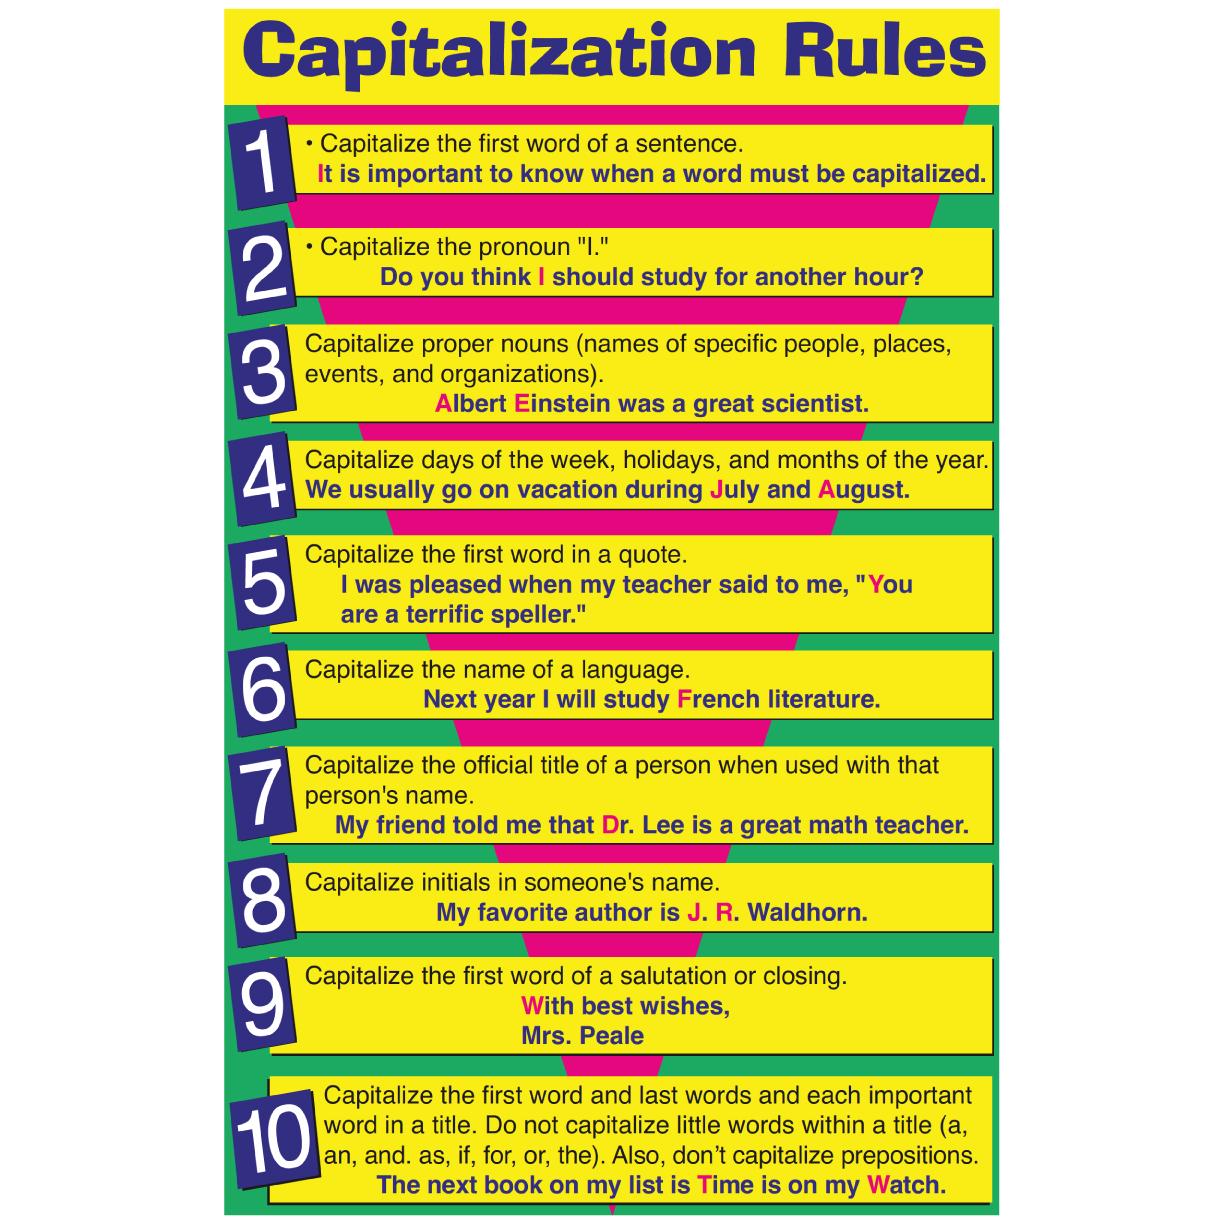 rules-of-capitalization-ubicaciondepersonas-cdmx-gob-mx